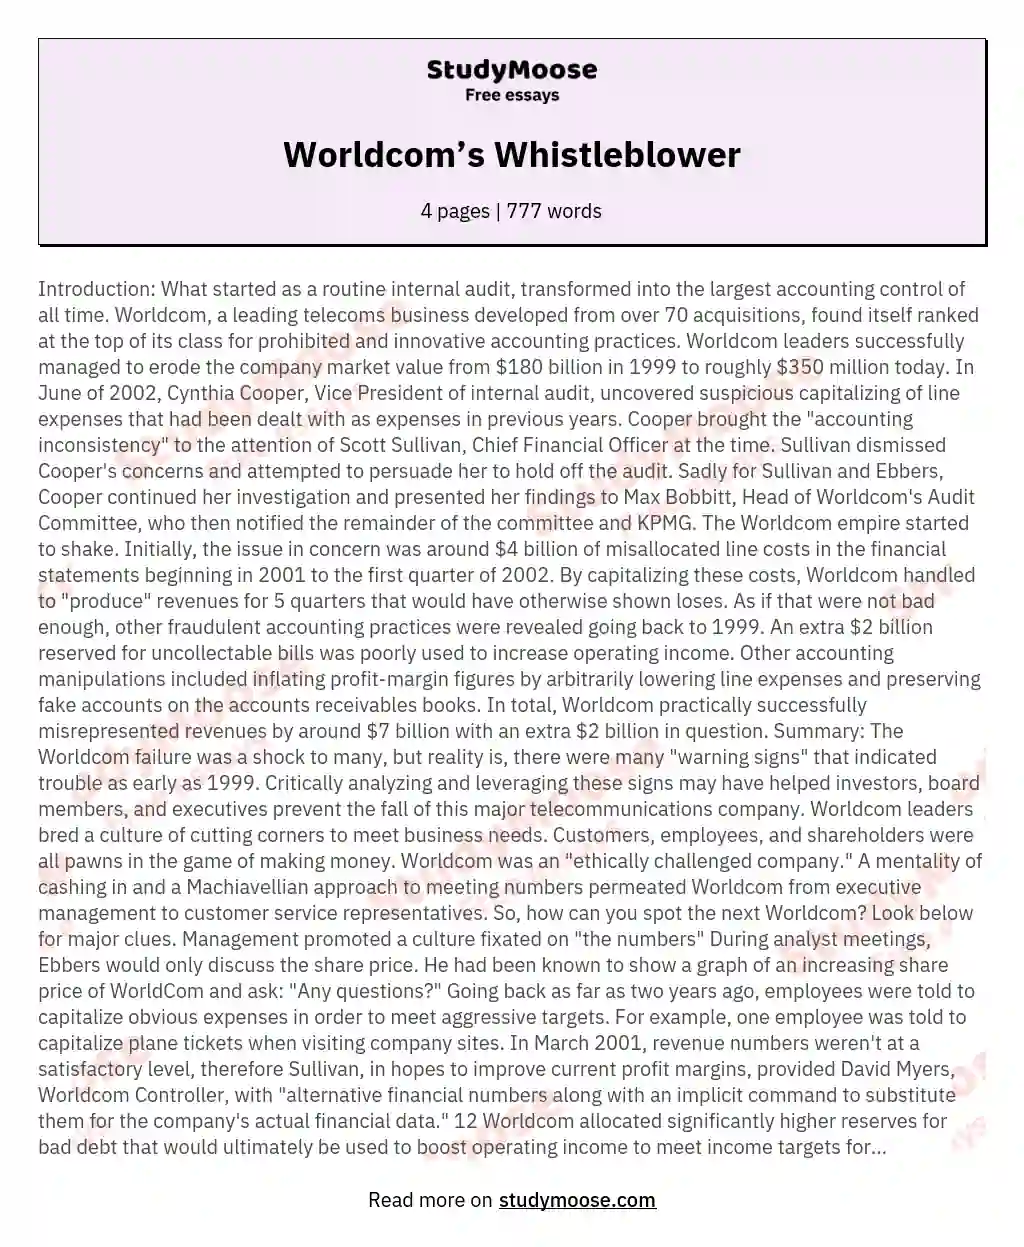 Worldcom’s Whistleblower essay